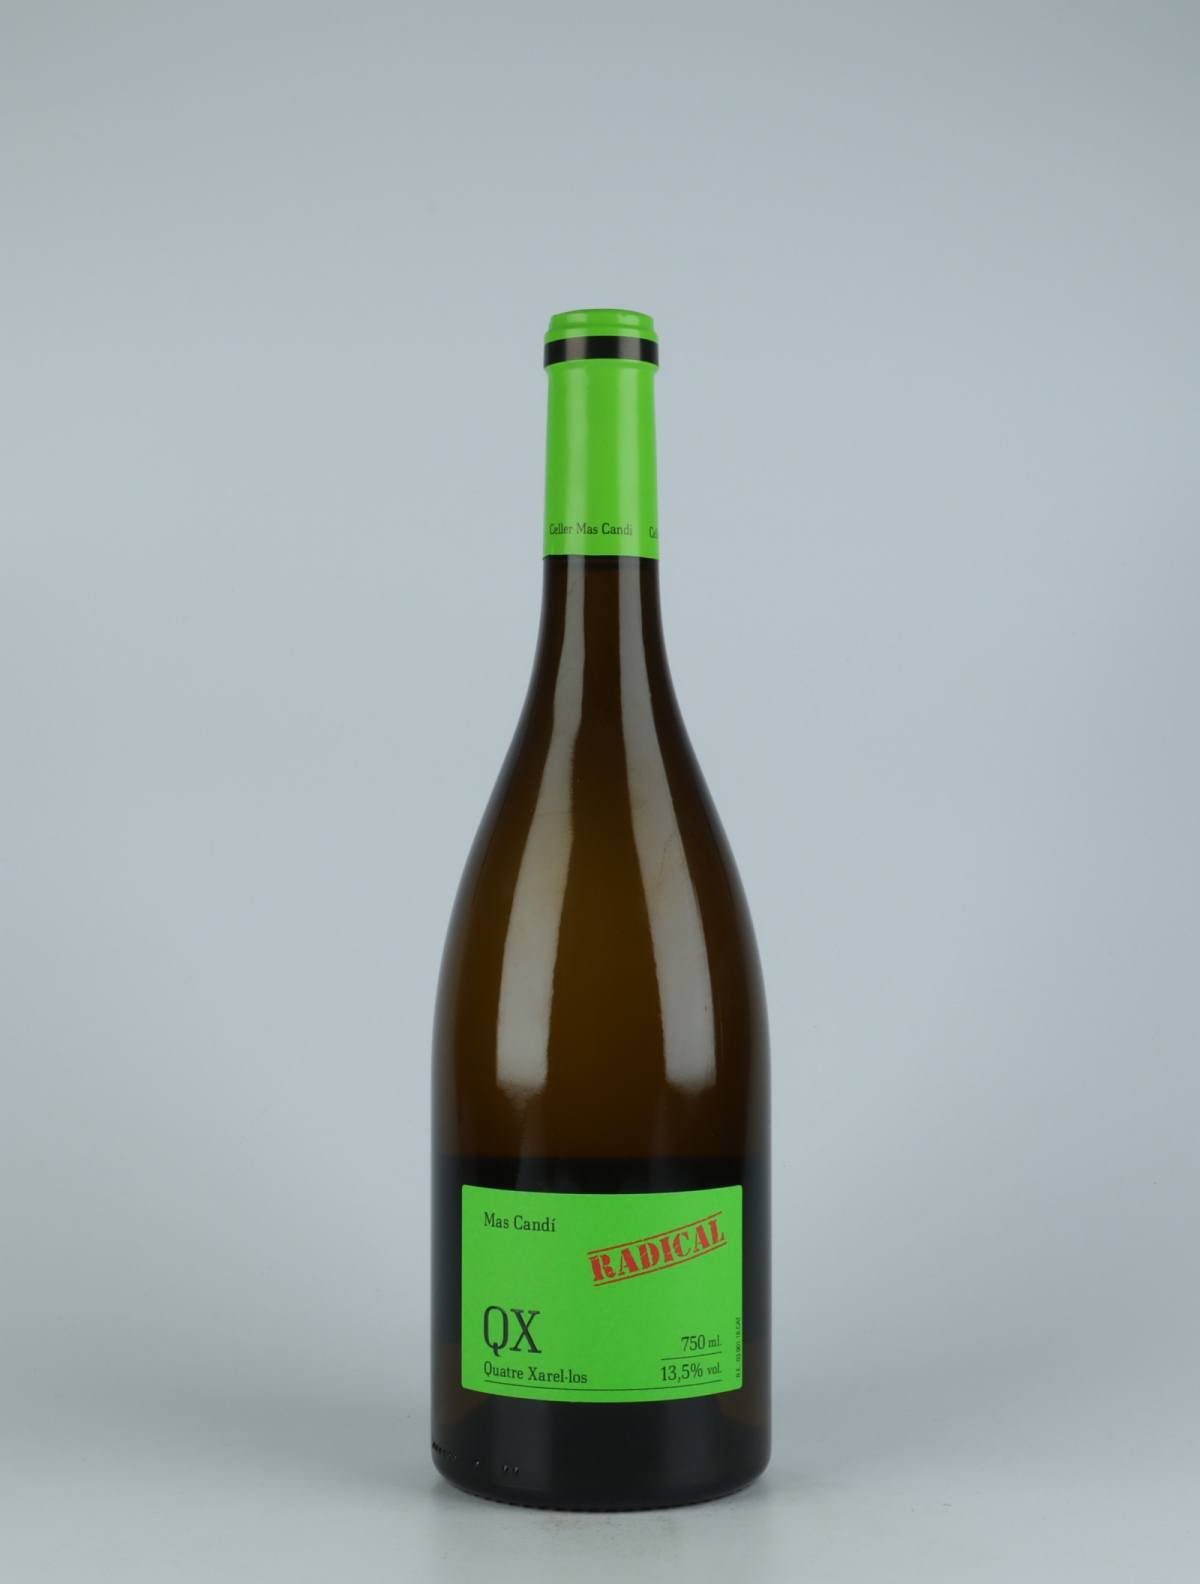 A bottle 2019 QX Radical White wine from Mas Candí, Penedès in Spain